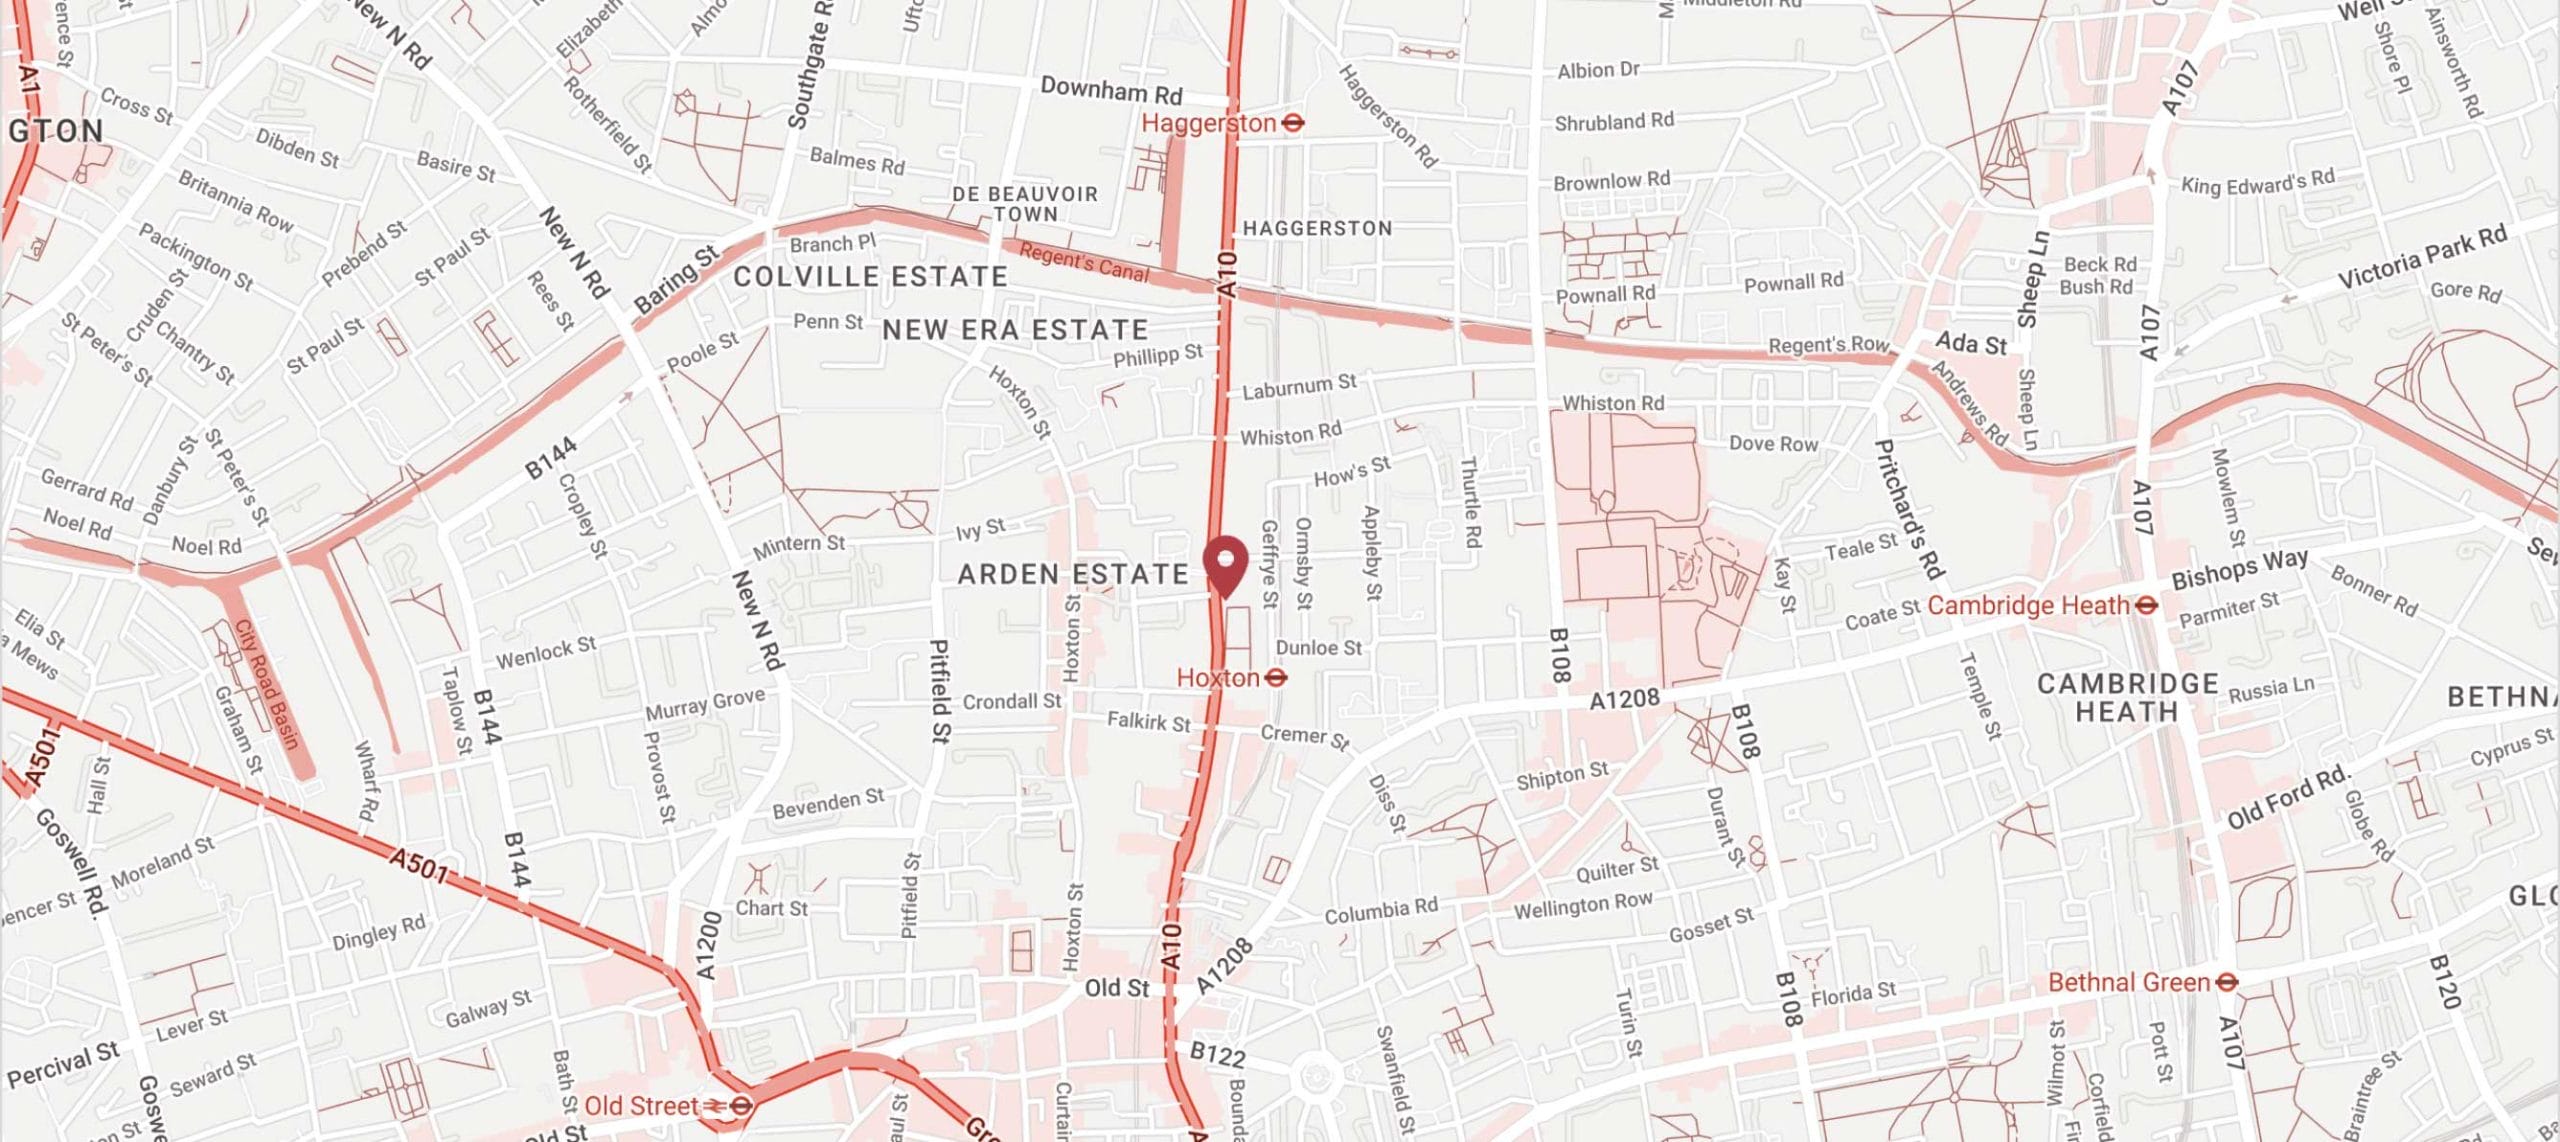 Map of the location of Bradbury Studios, close to Hoxton station.